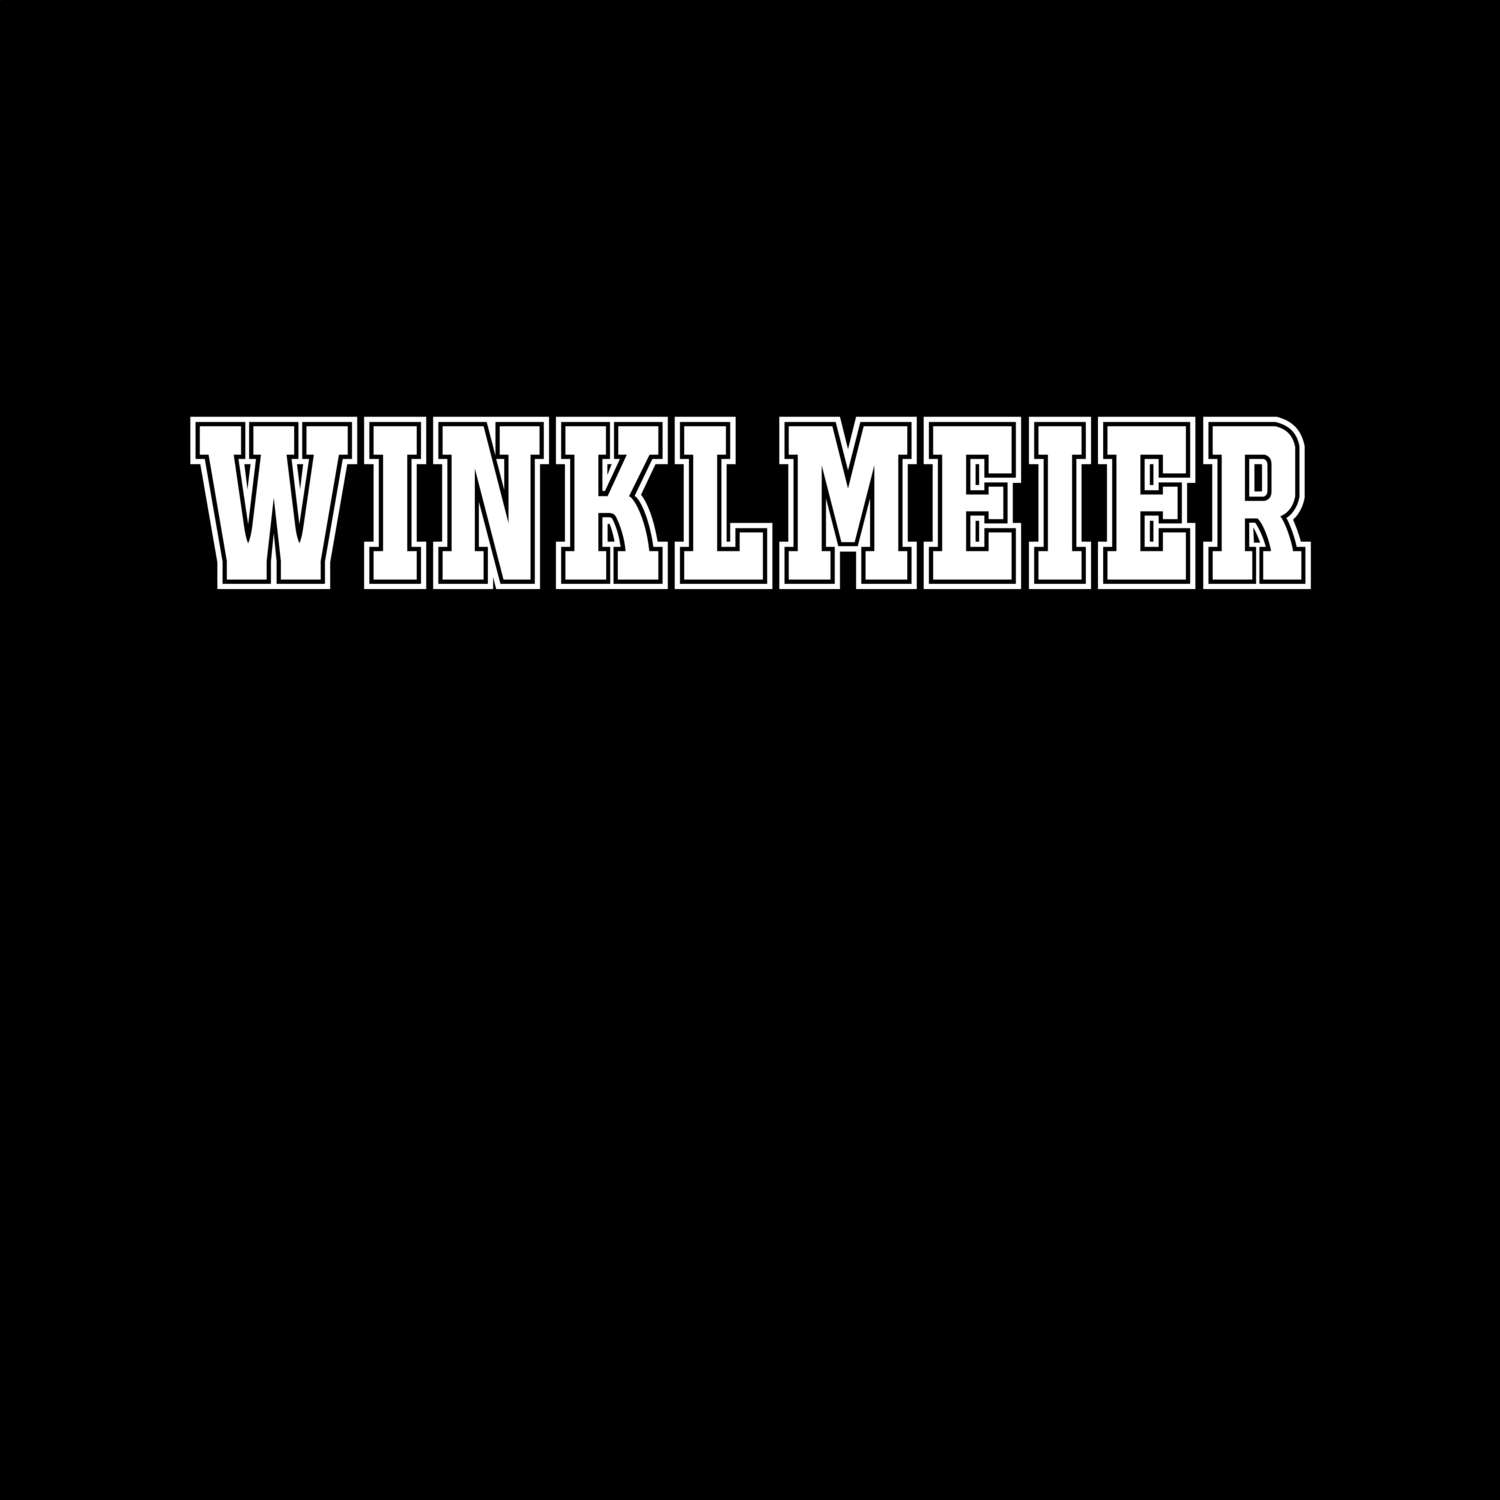 Winklmeier T-Shirt »Classic«